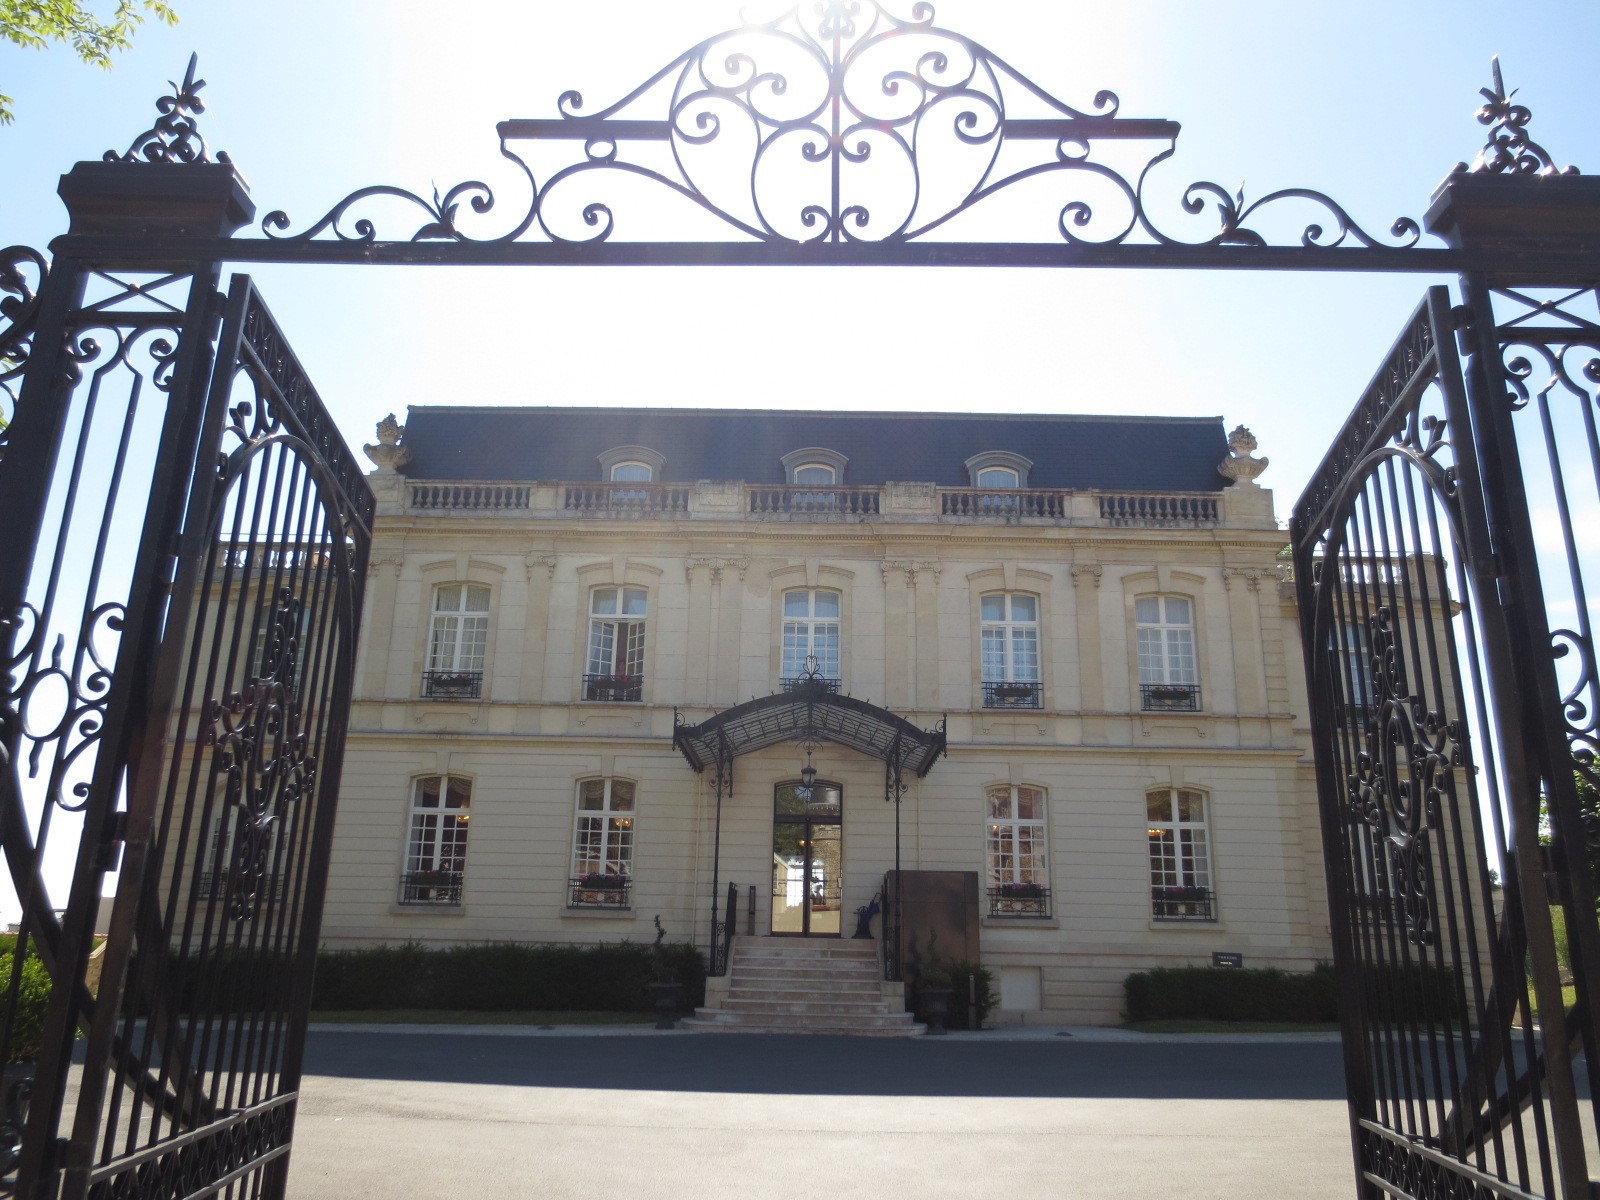 Slottet Chateau de Rilly i Champagne